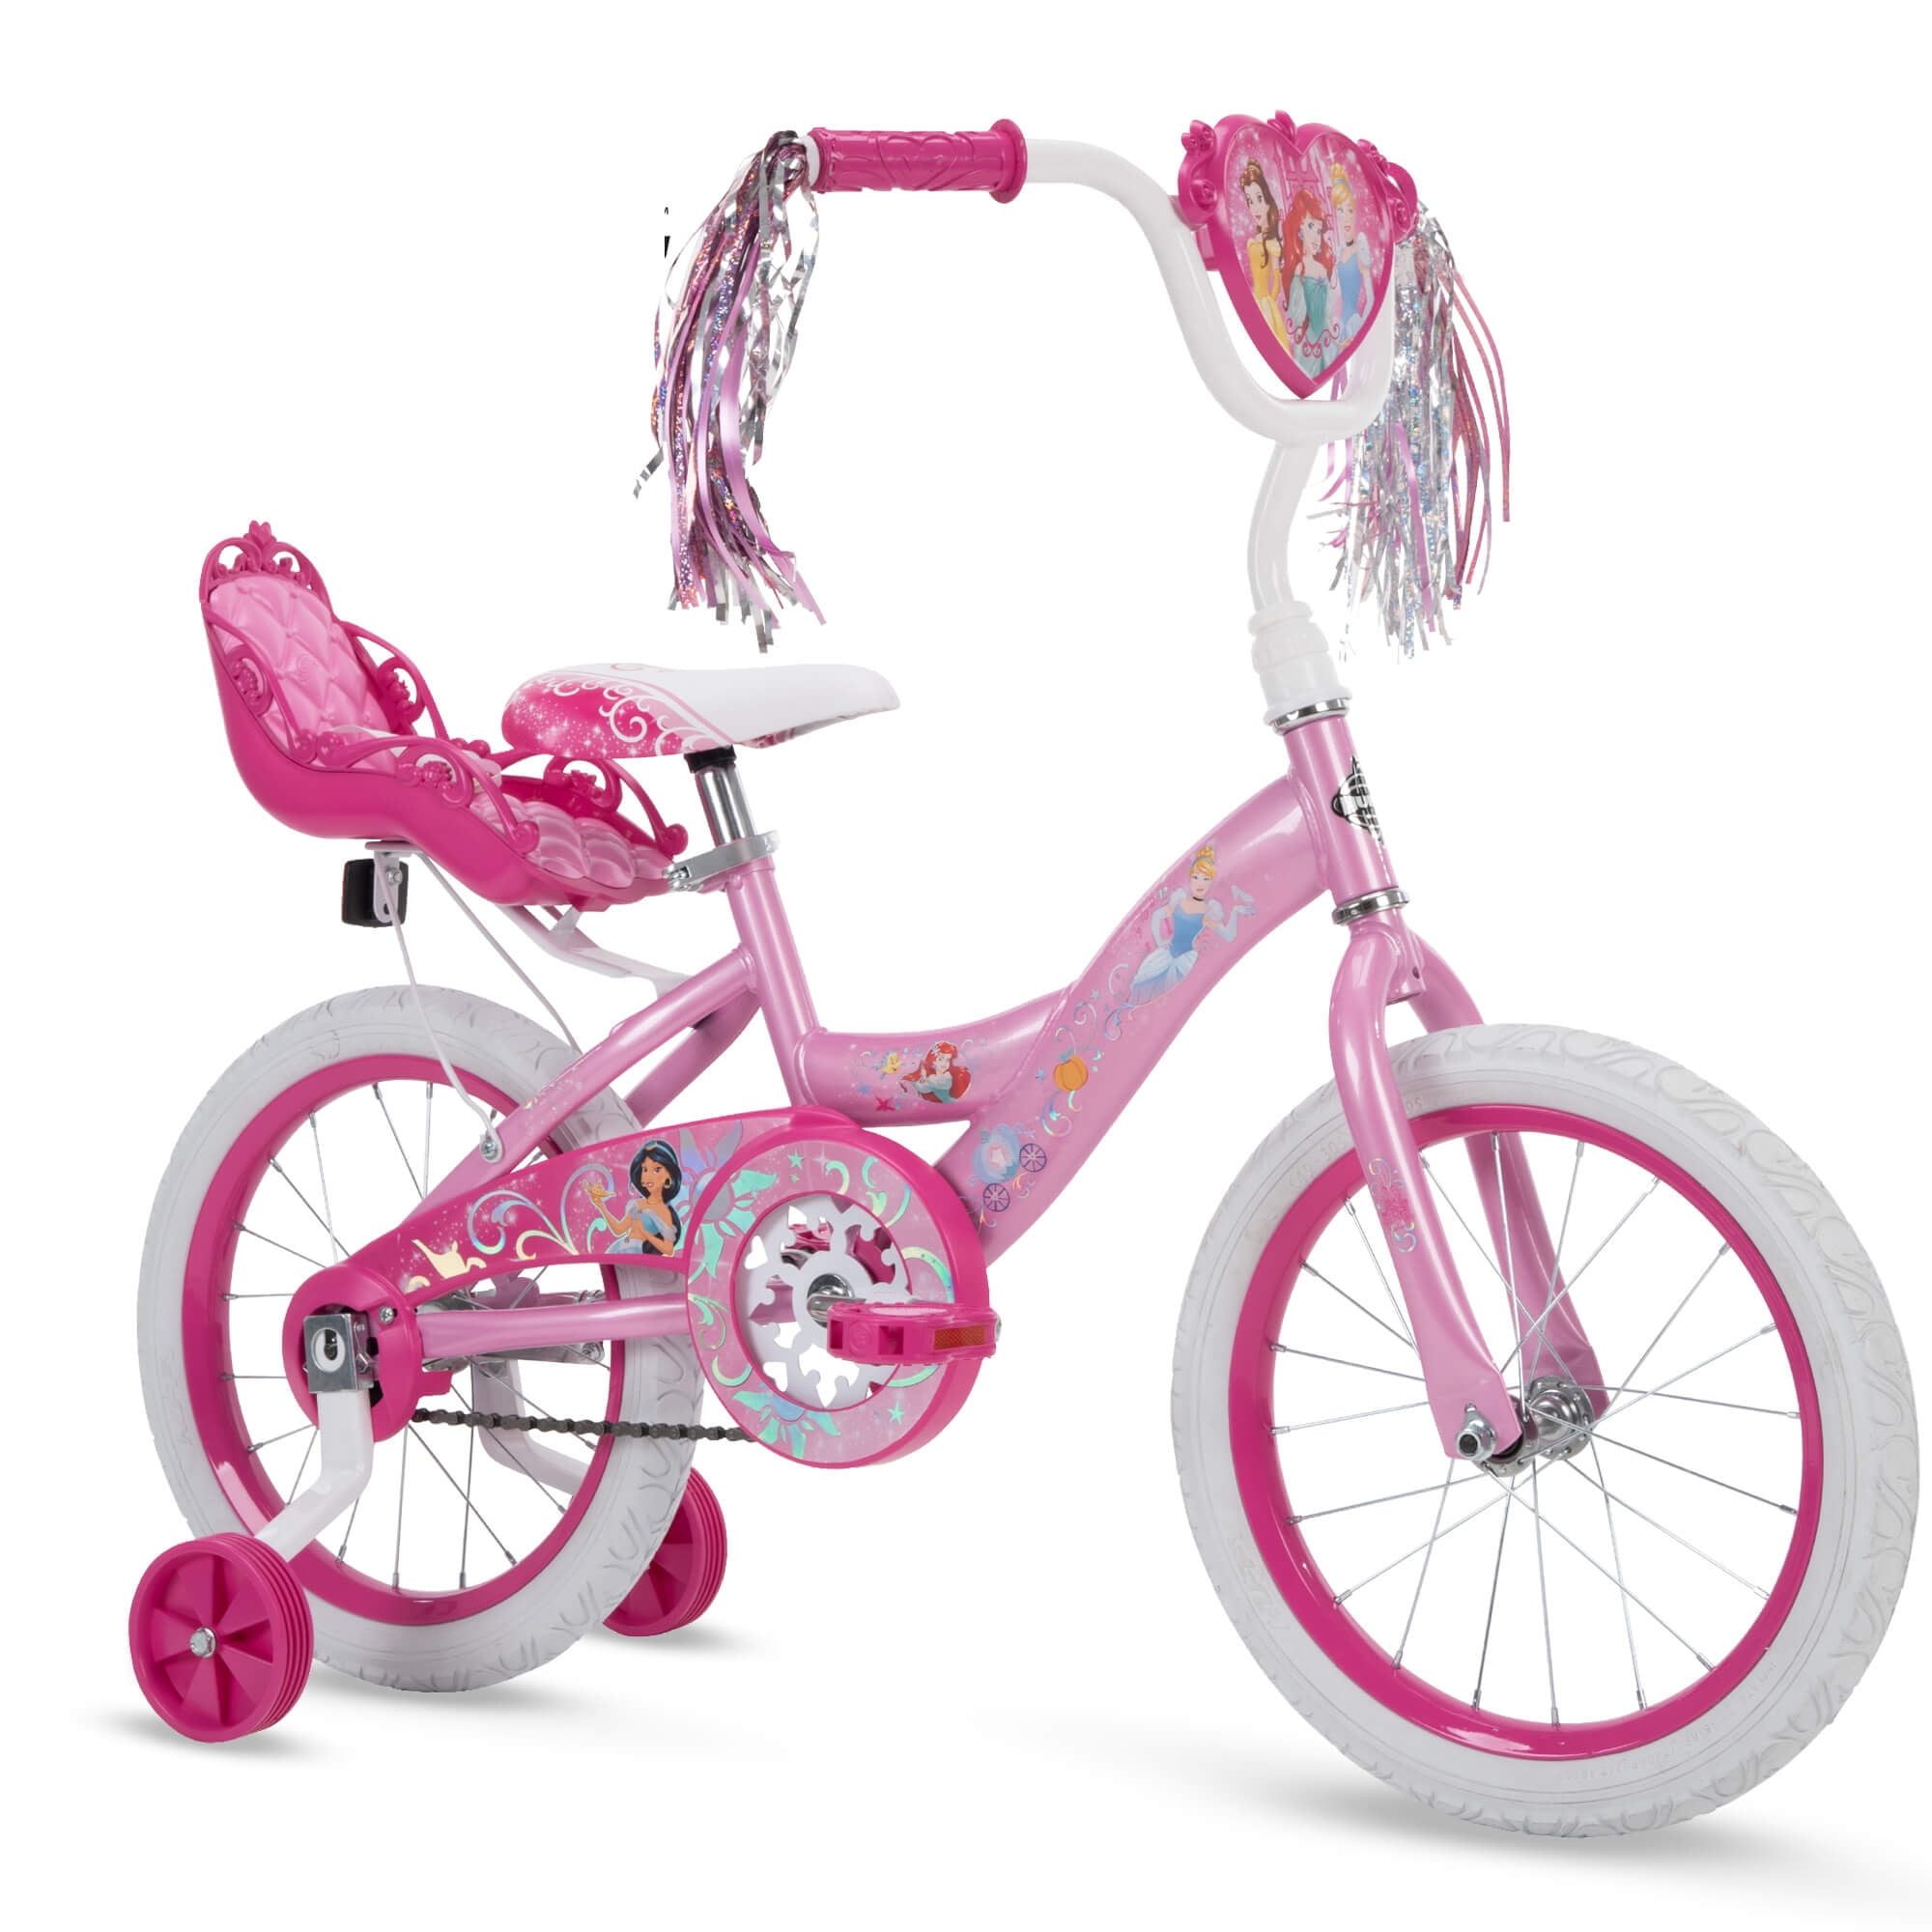 Disney Princess 16" Sidewalk Bike by Huffy Pink -